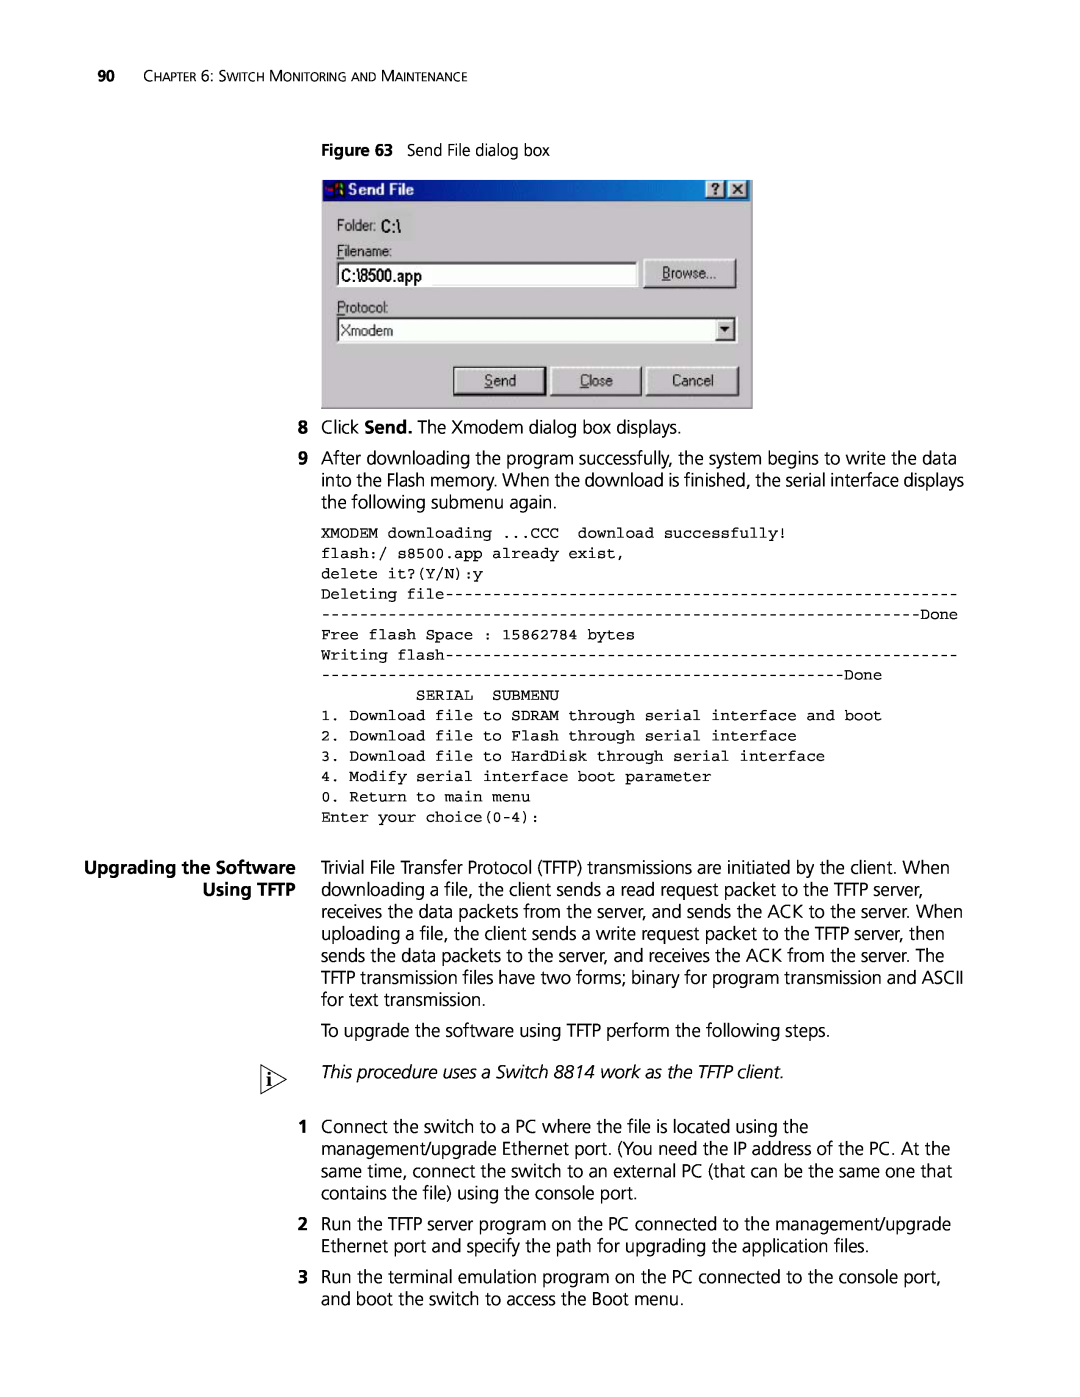 3Com 8807, 8814, 8810 manual Click Send. The Xmodem dialog box displays 